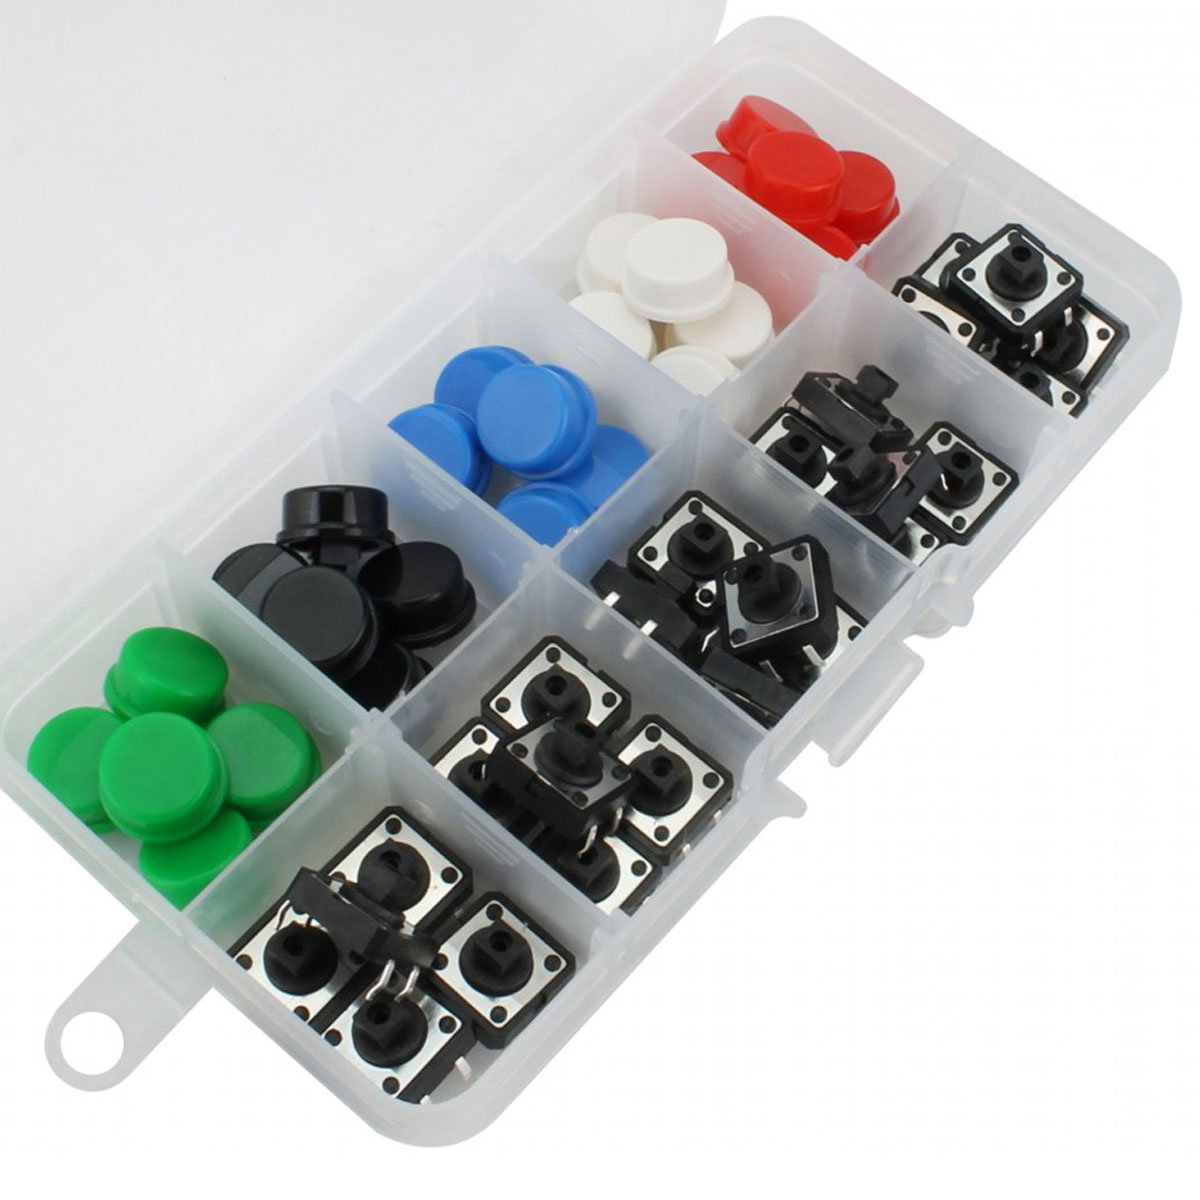 Kit Push Button 12x12 com Capas Coloridas 25 Unidades + Caixa